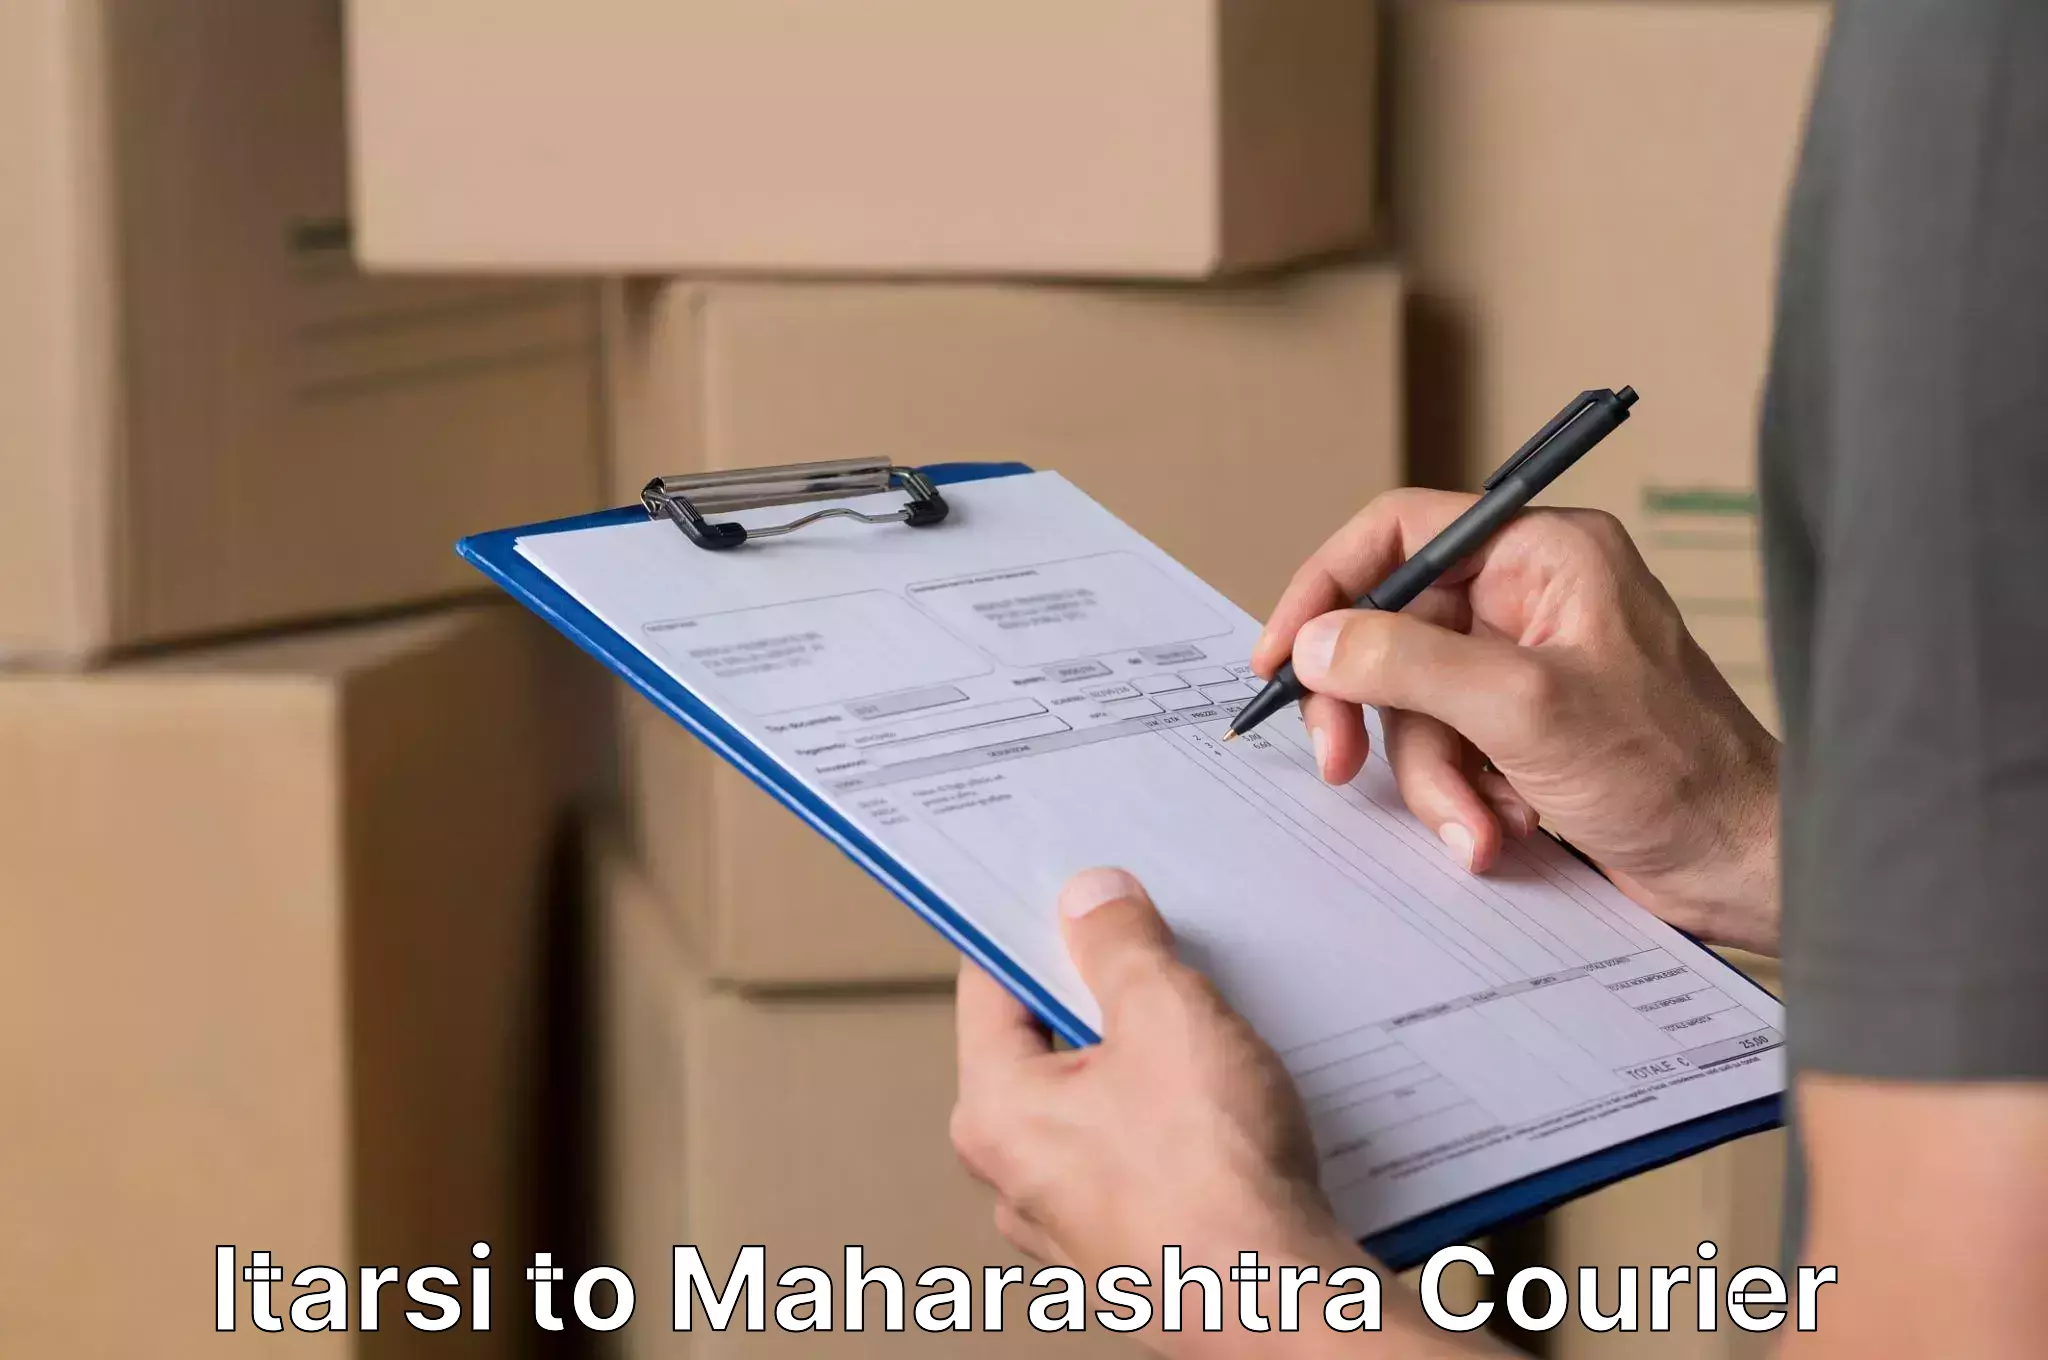 Furniture transport company Itarsi to Maharashtra